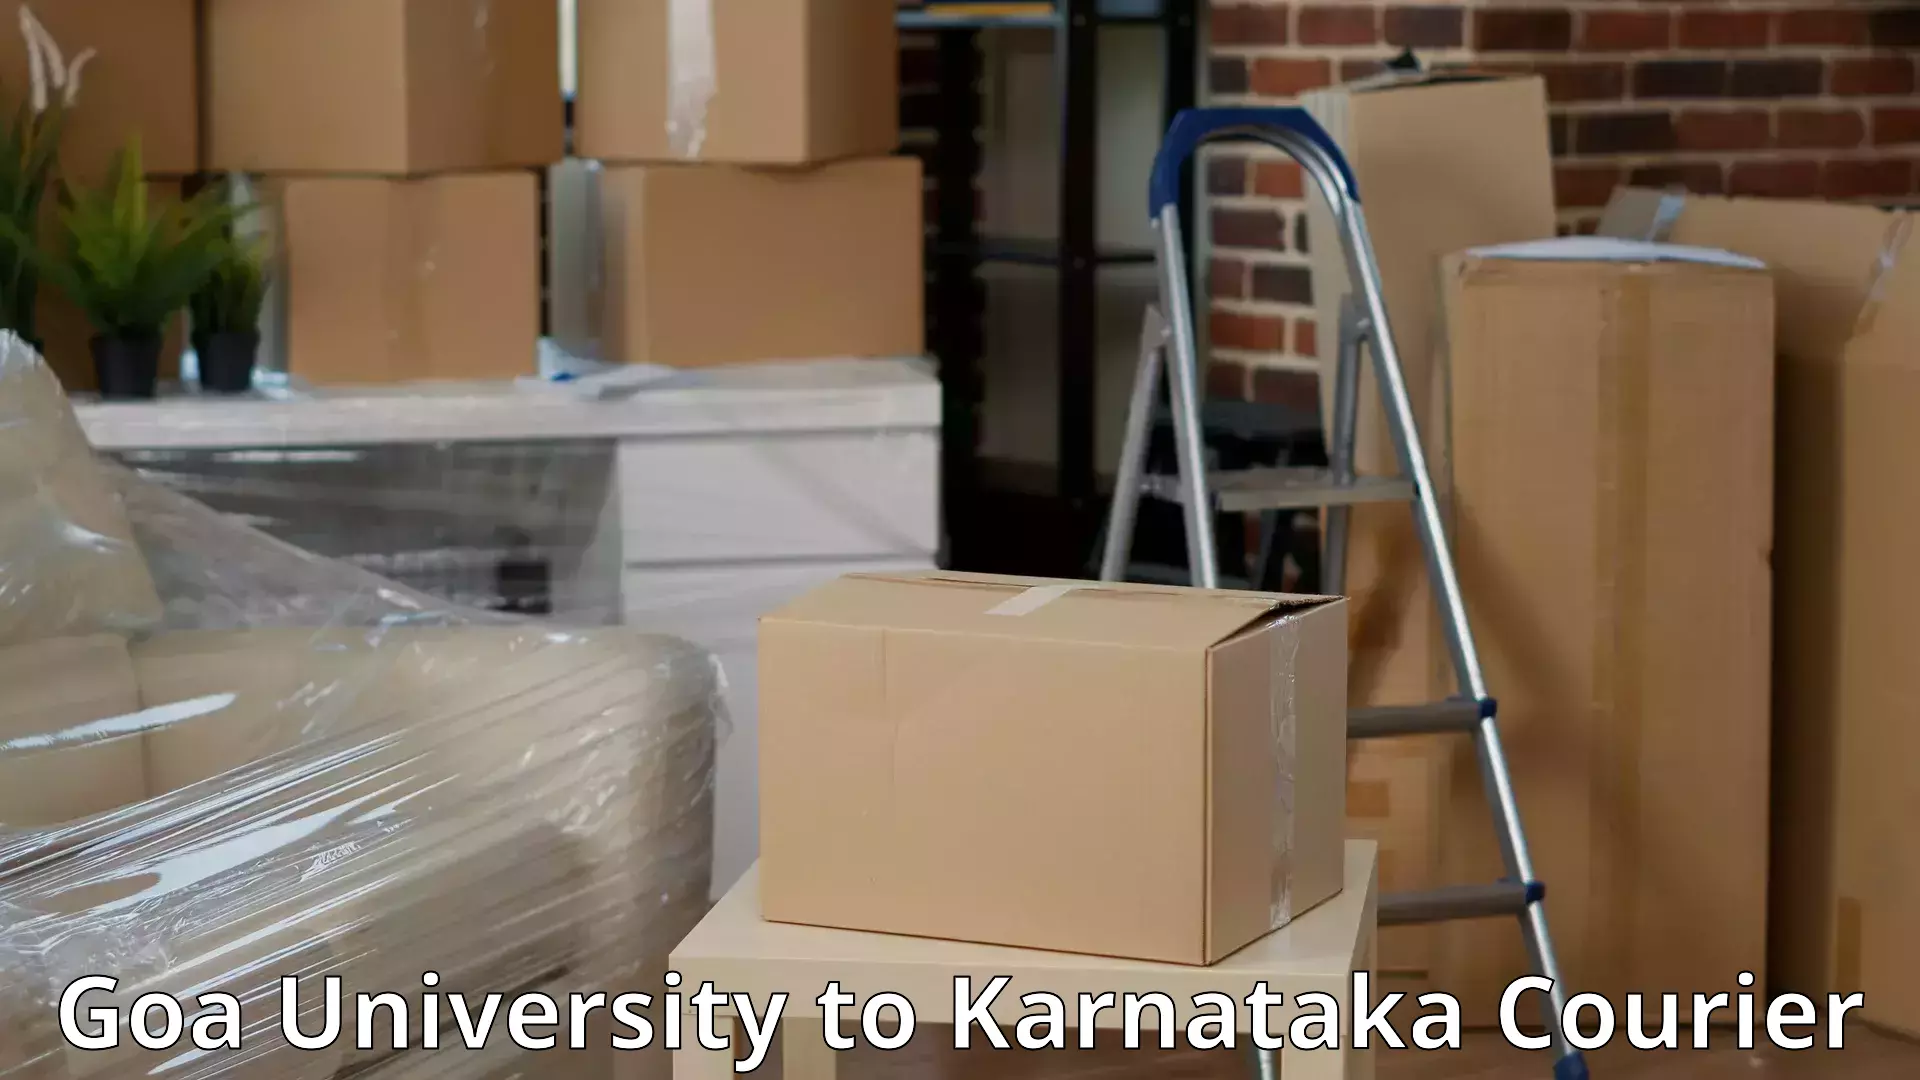 Household goods transport service Goa University to Karnataka